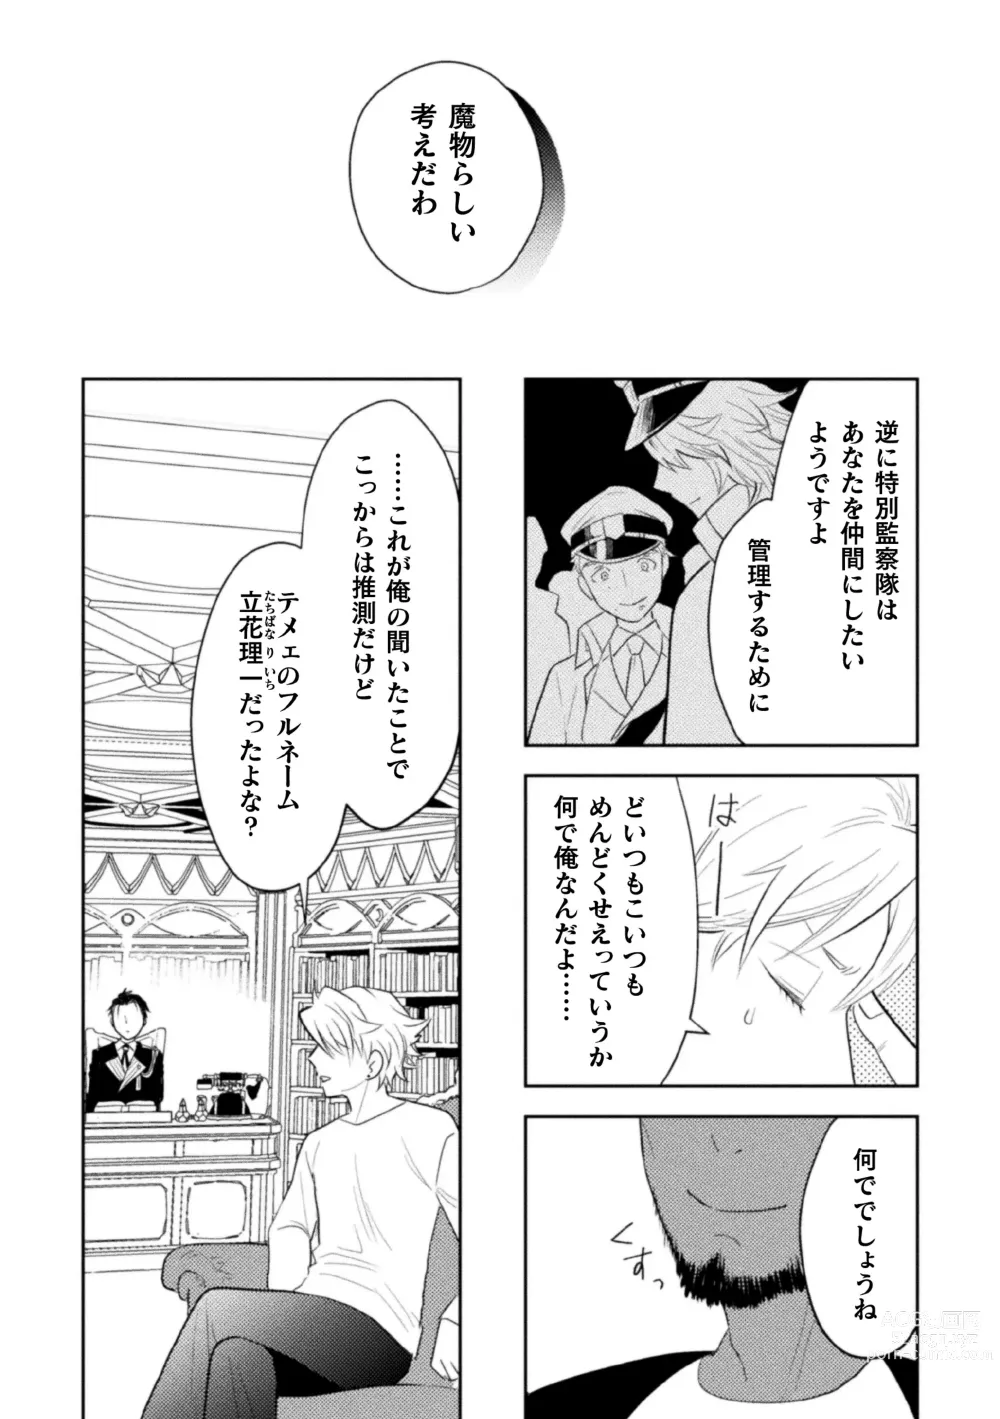 Page 14 of manga Zekkai Rougoku Kan Eien no Rougoku Kouhen